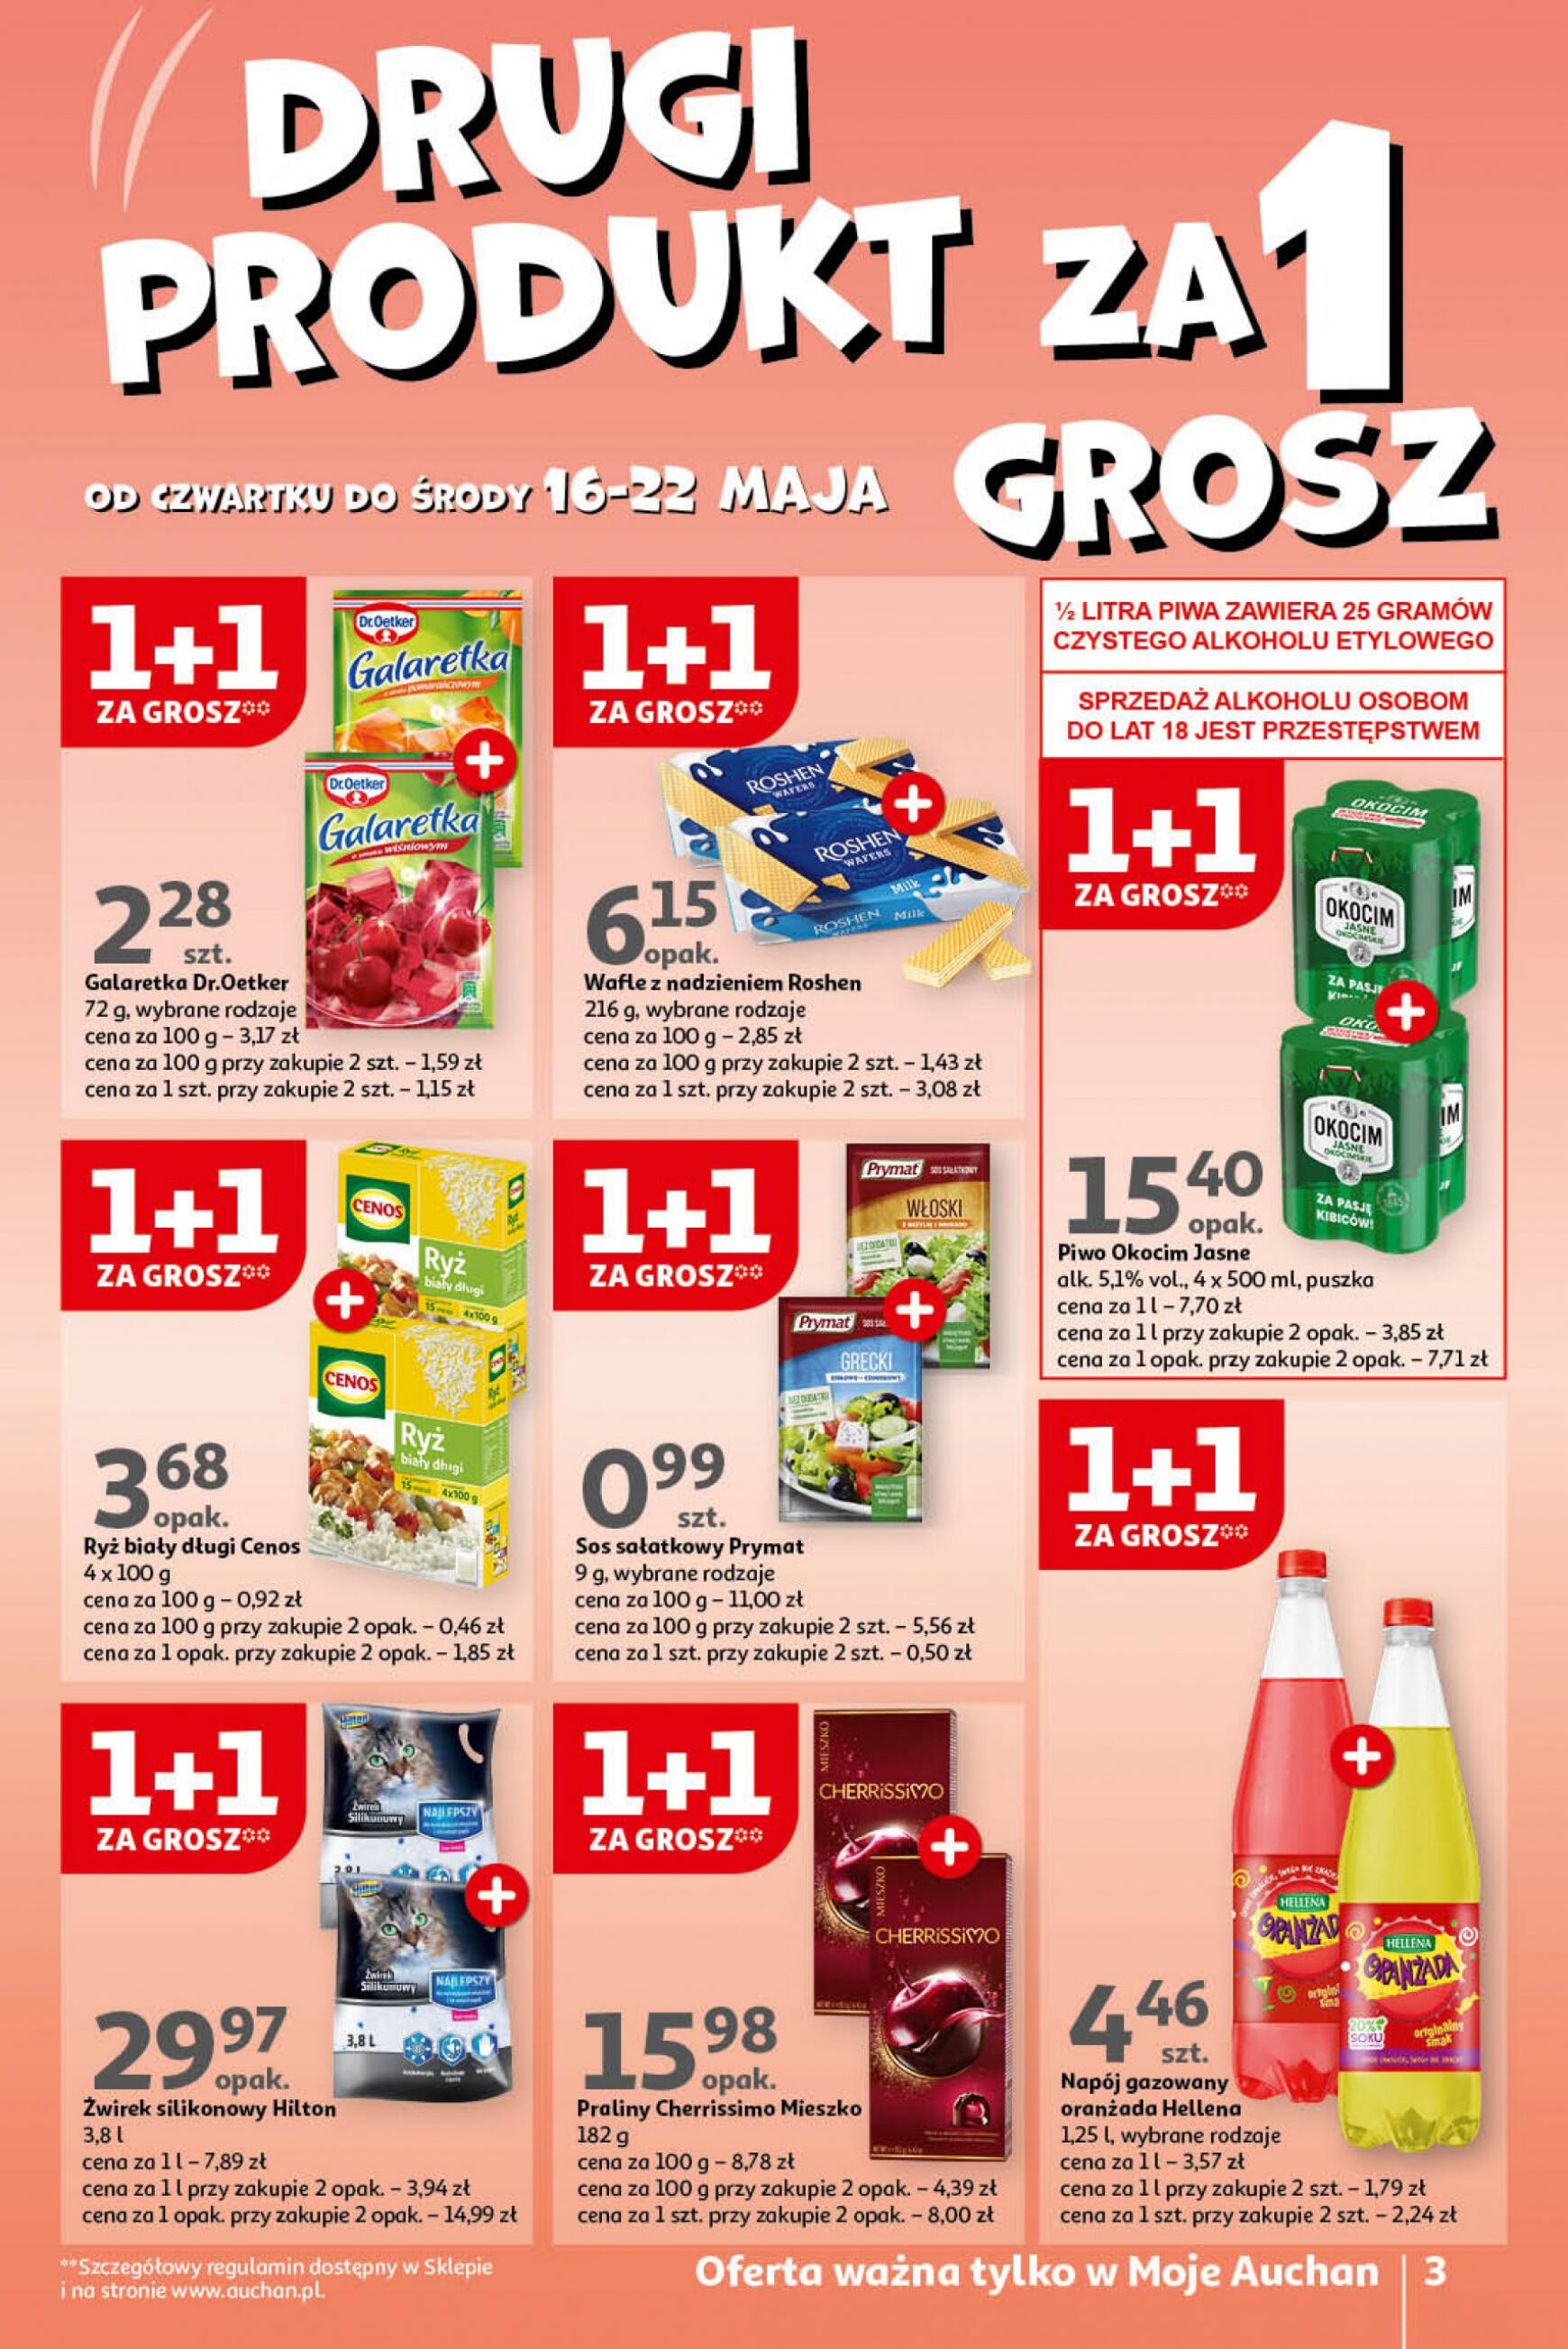 auchan - Moje Auchan gazetka aktualna ważna od 16.05. - 22.05. - page: 3